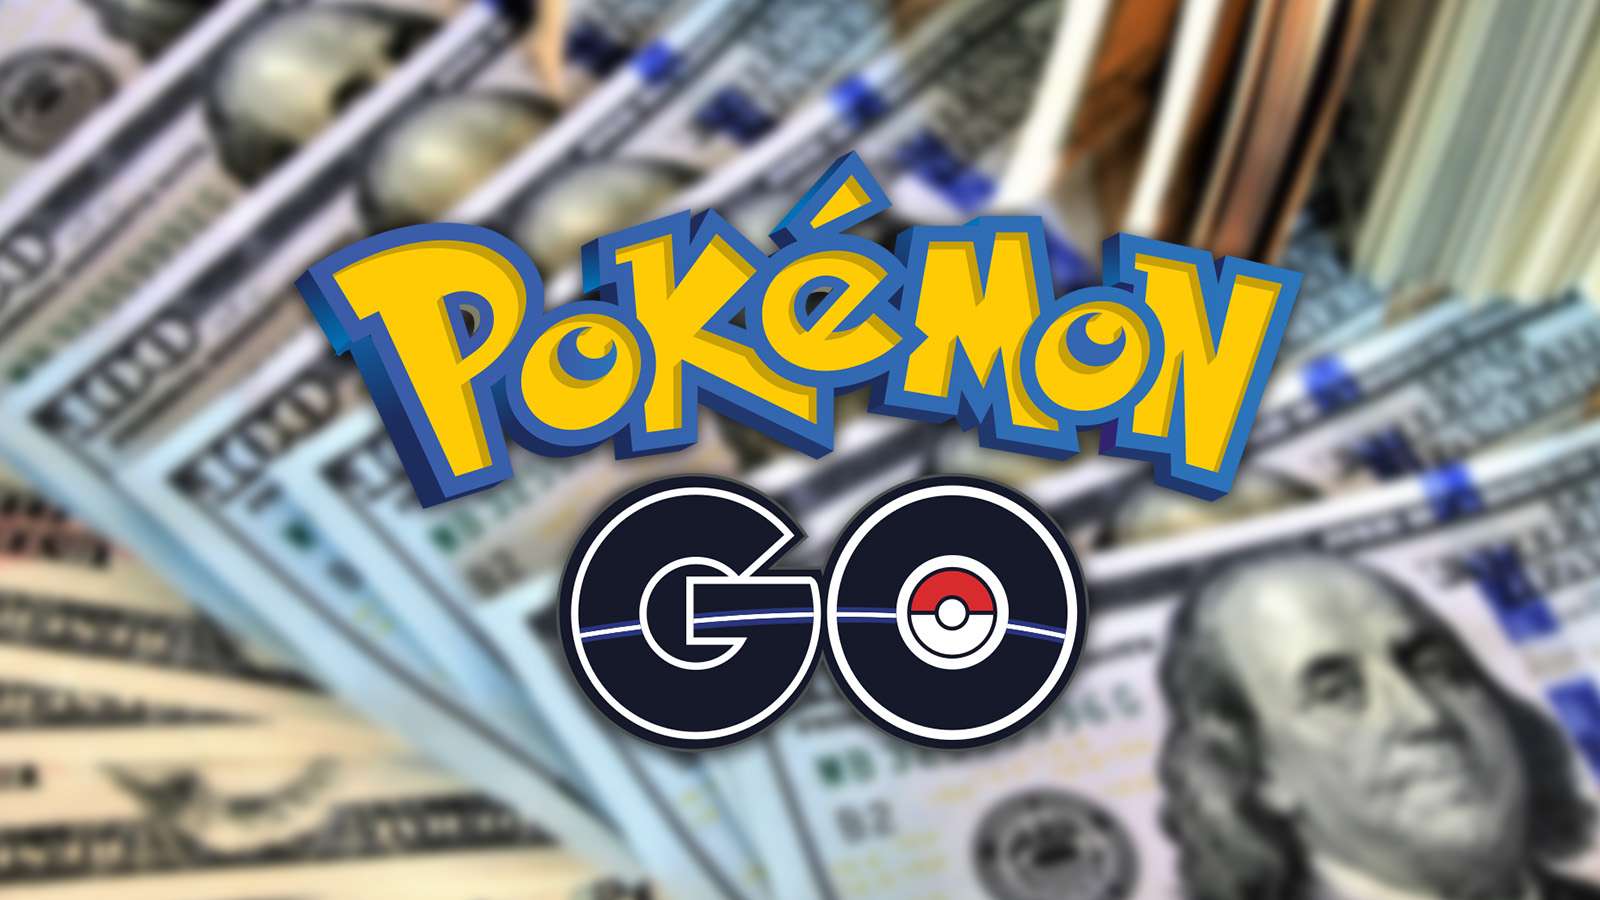 Pokemon go logo with money in the background